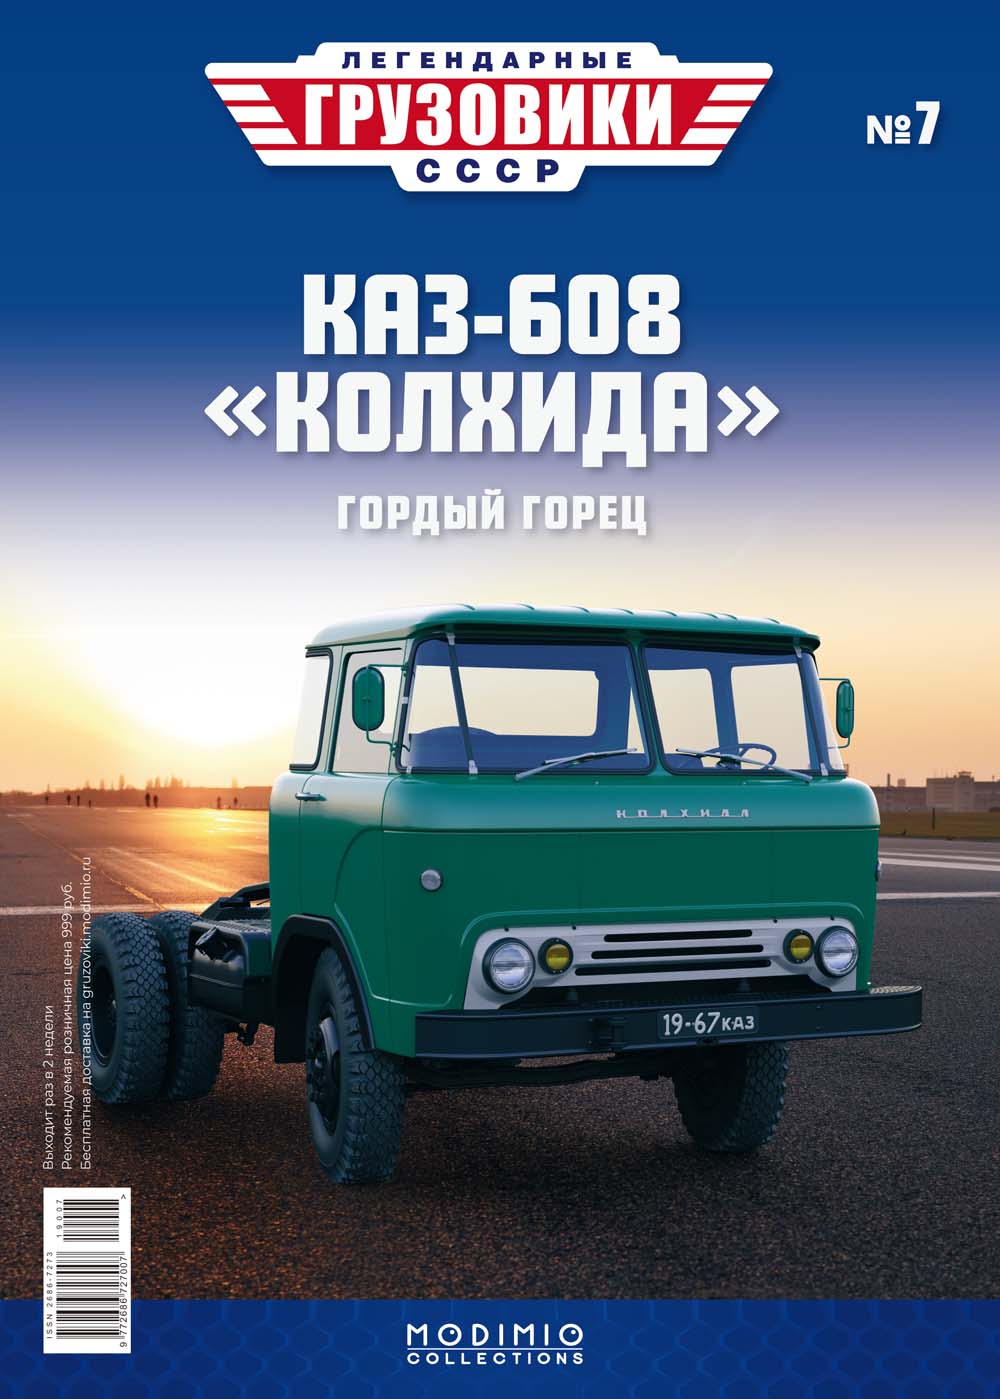 Журнал Легендарные грузовики СССР №7, КАЗ-608 "Колхида" от MODIMIO